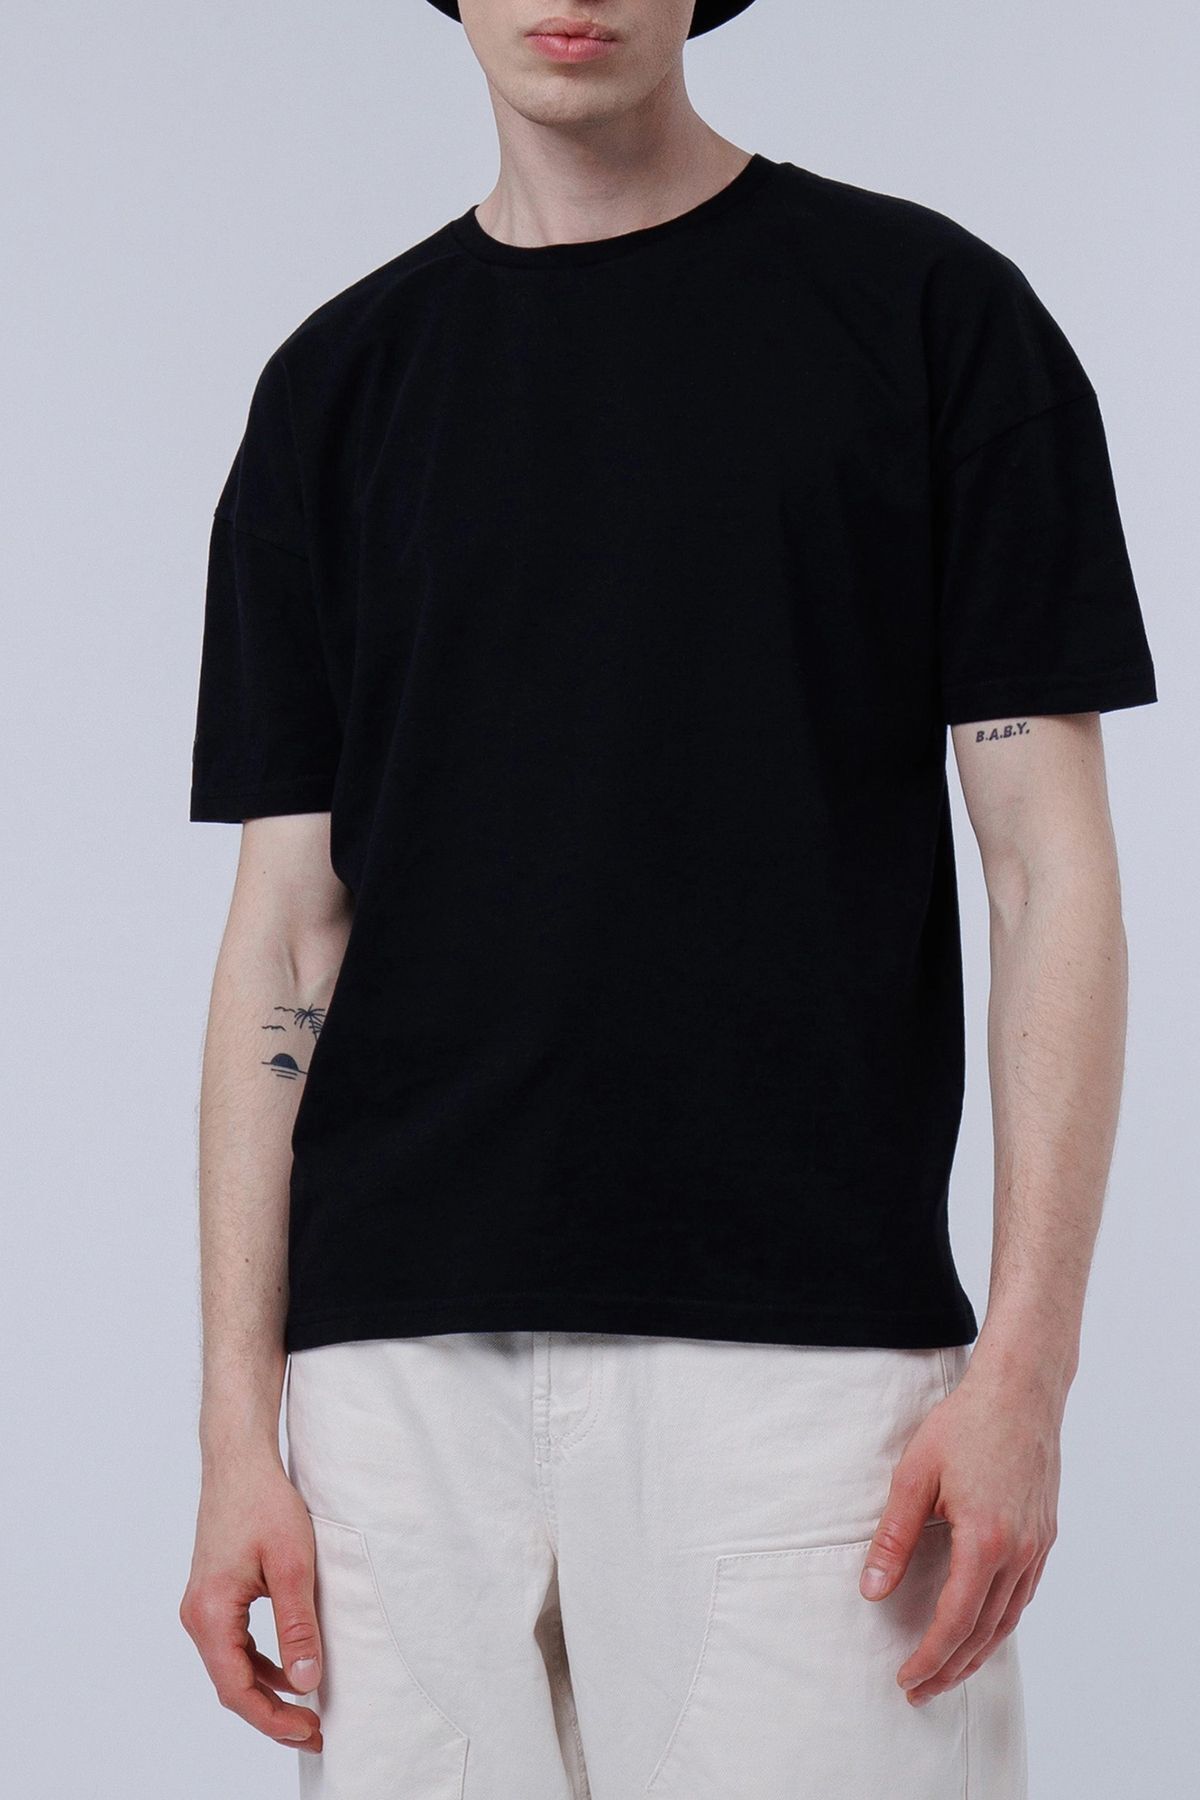 Nordbron Erkek Siyah Stuga %100 Pamuk Oversize Rahat Basic Logo Baskılı Kısa Kollu Bisiklet Yaka T-shirt